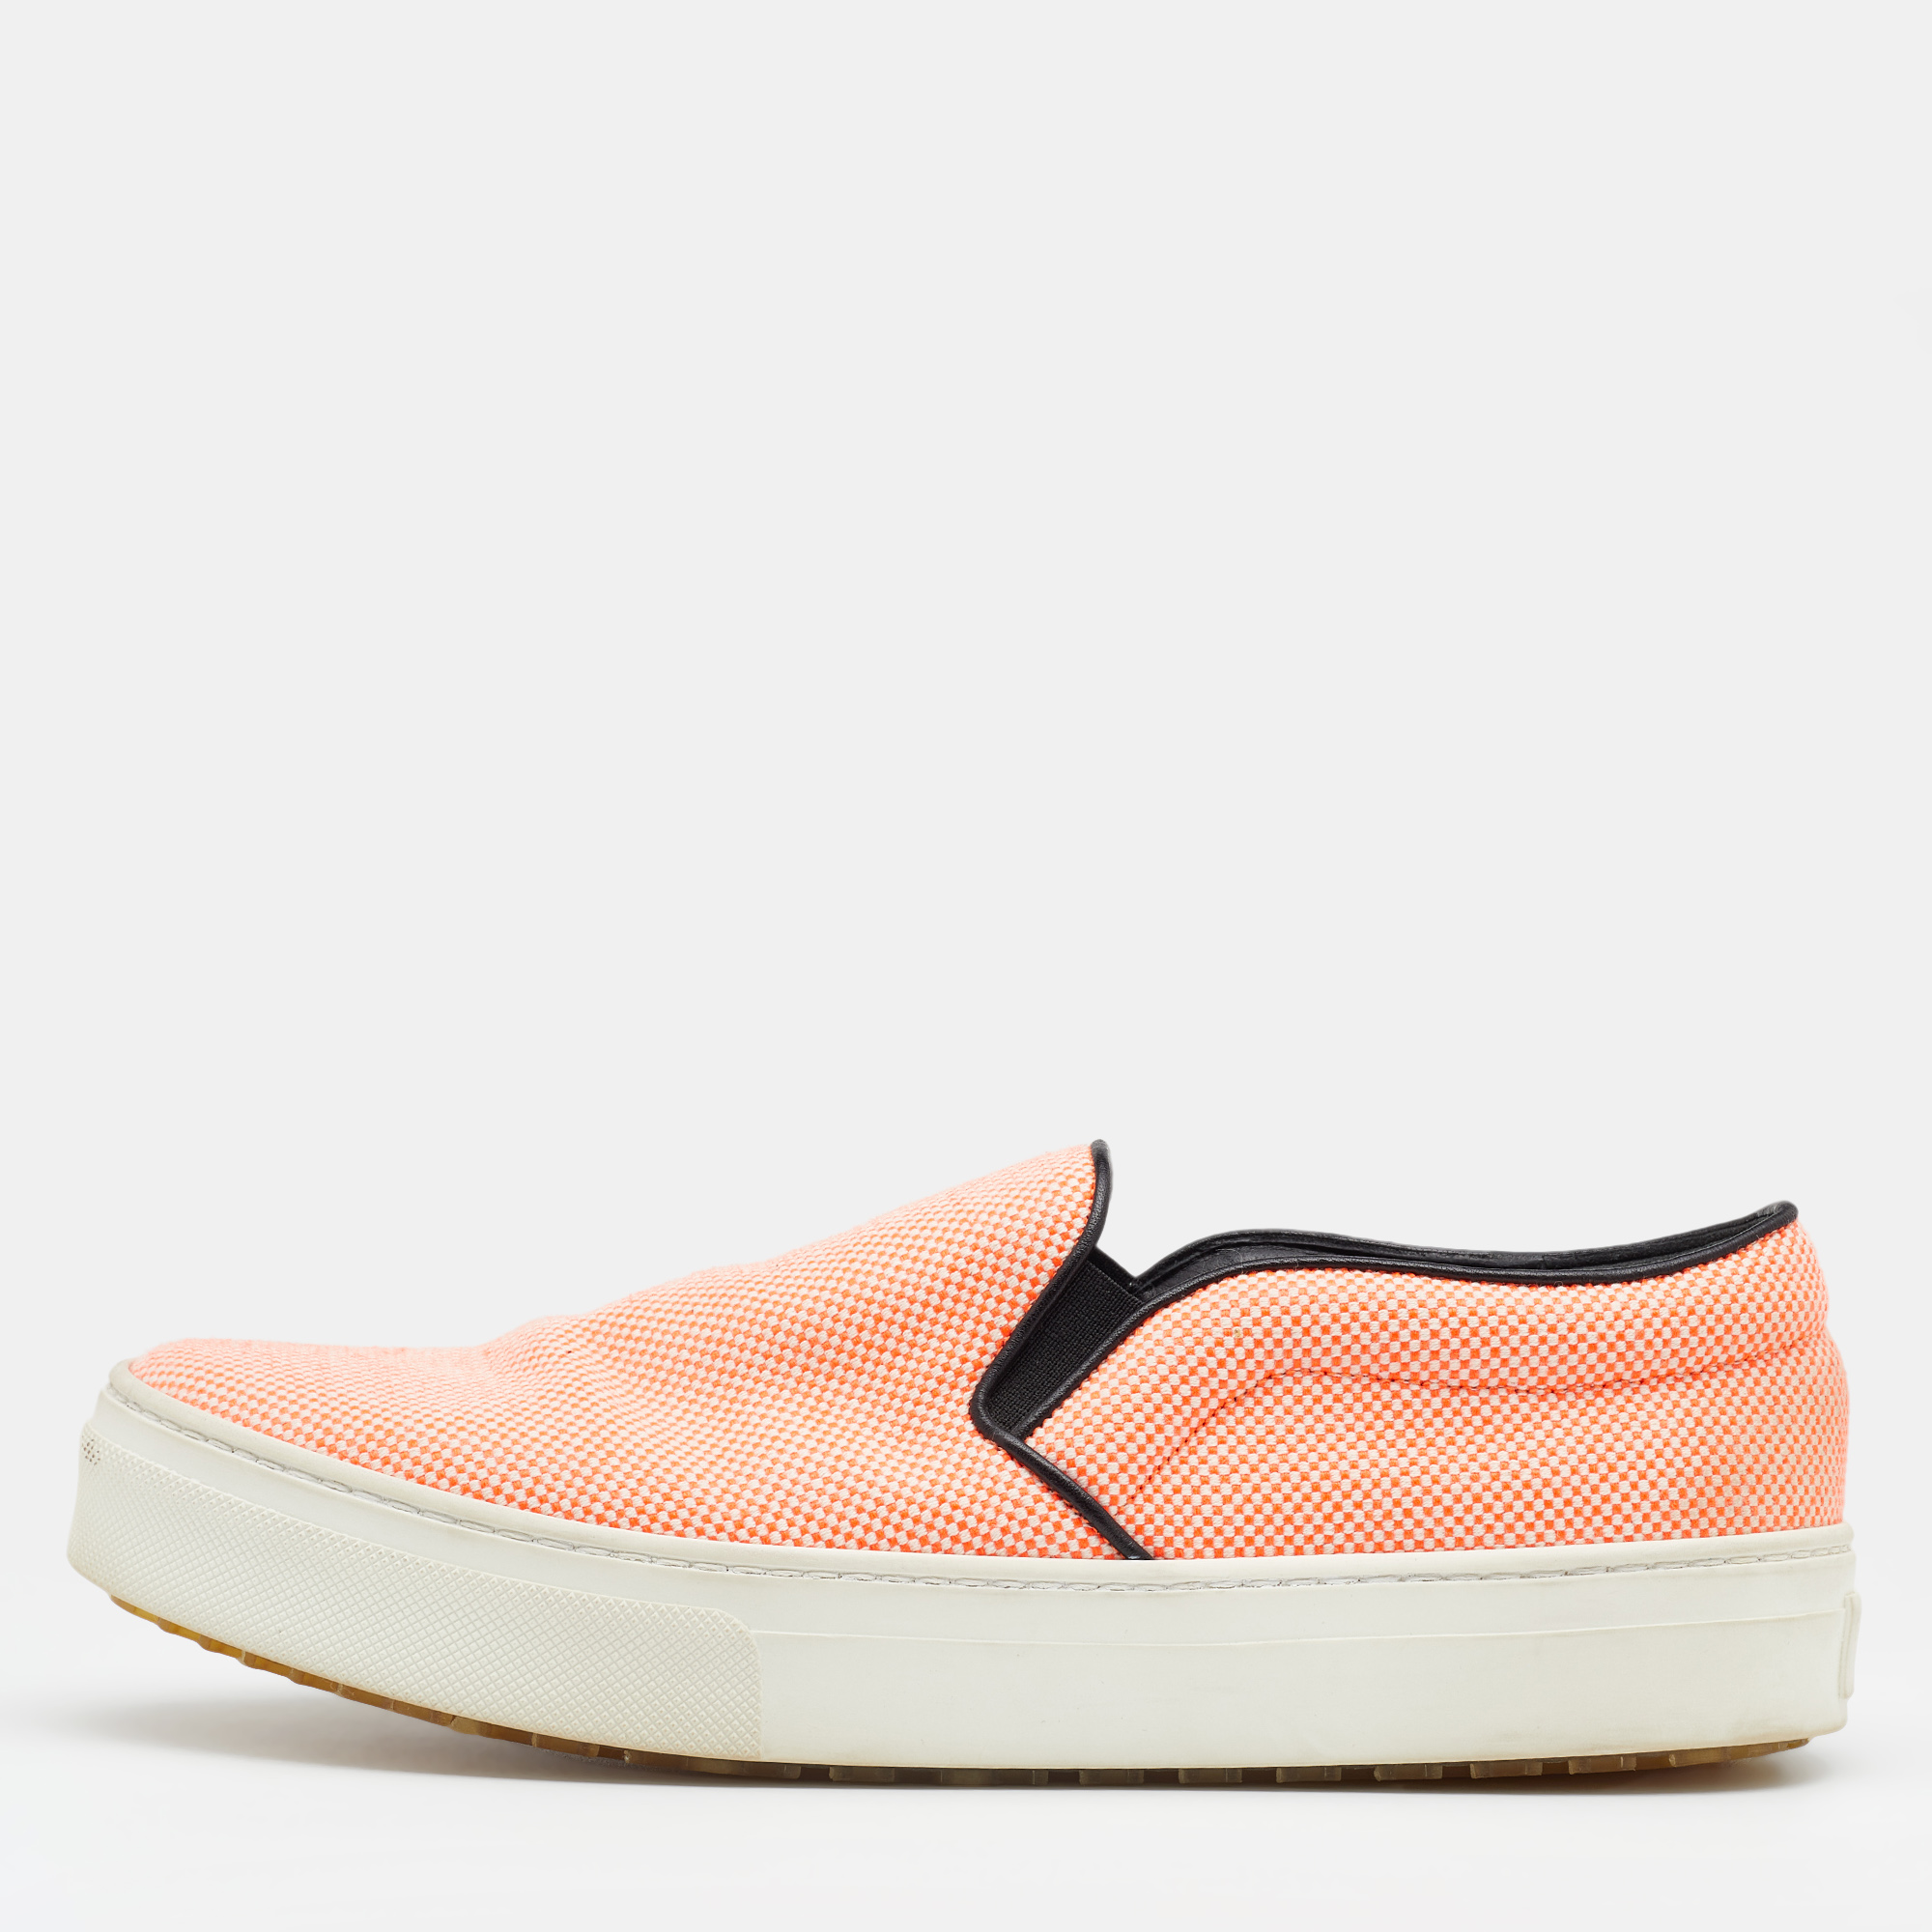 Celine orange canvas slip on sneakers size 38